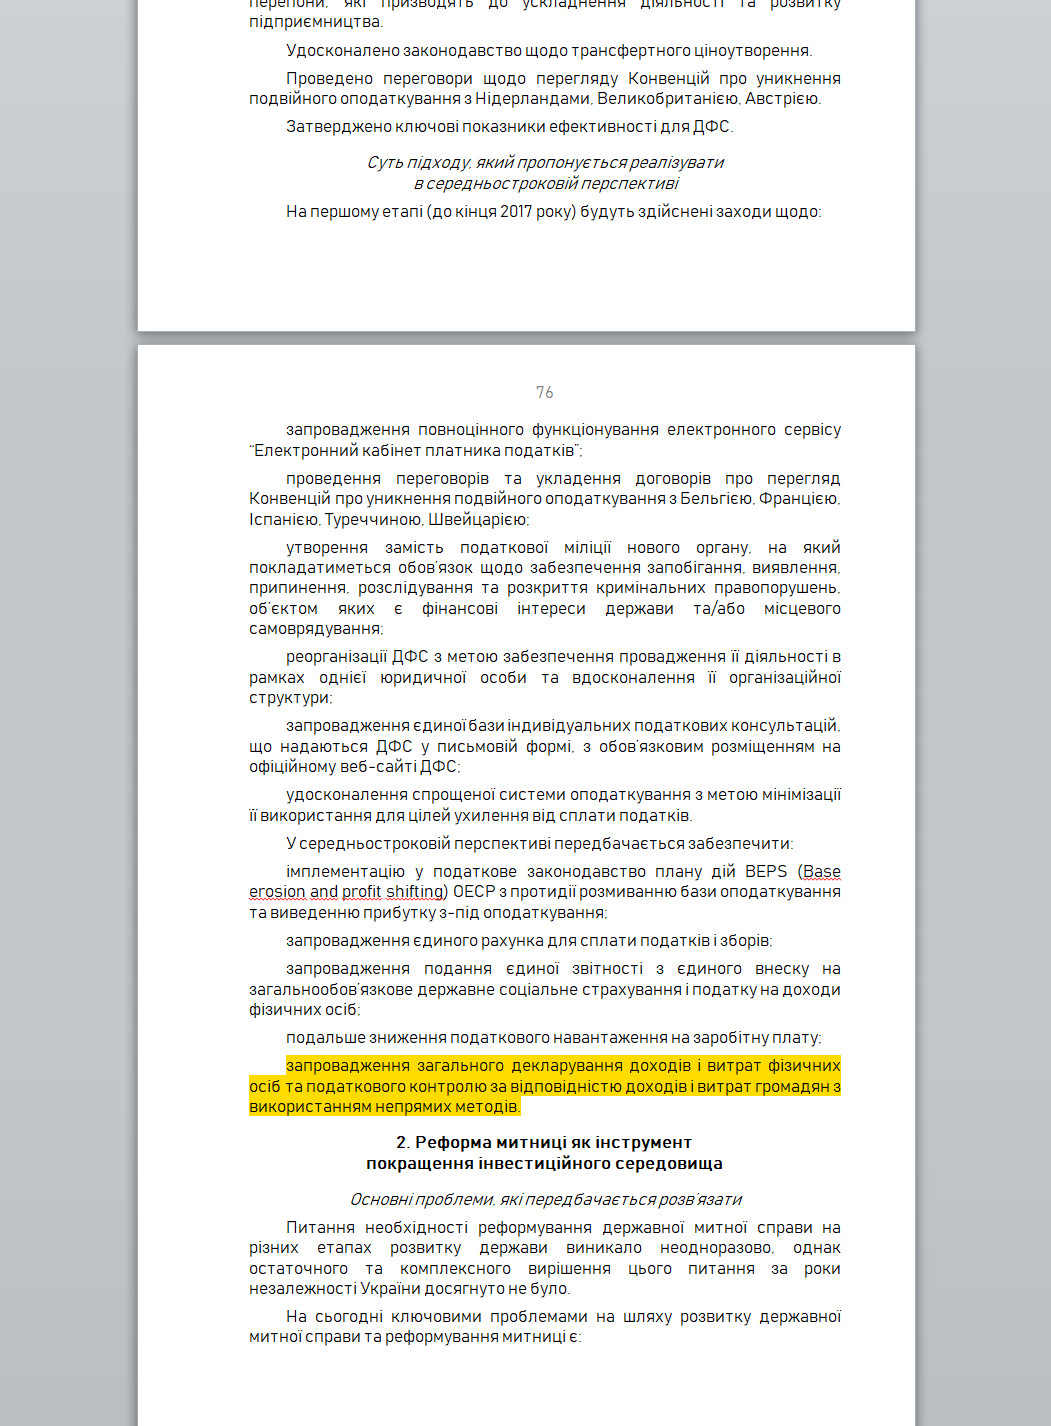 https://www.kmu.gov.ua/ua/diyalnist/programa-diyalnosti-uryadu/serednostrokovij-plan-prioritetnih-dij-uryadu-do-2020-roku-ta-plan-prioritetnih-dij-uryadu-na-2017-rik